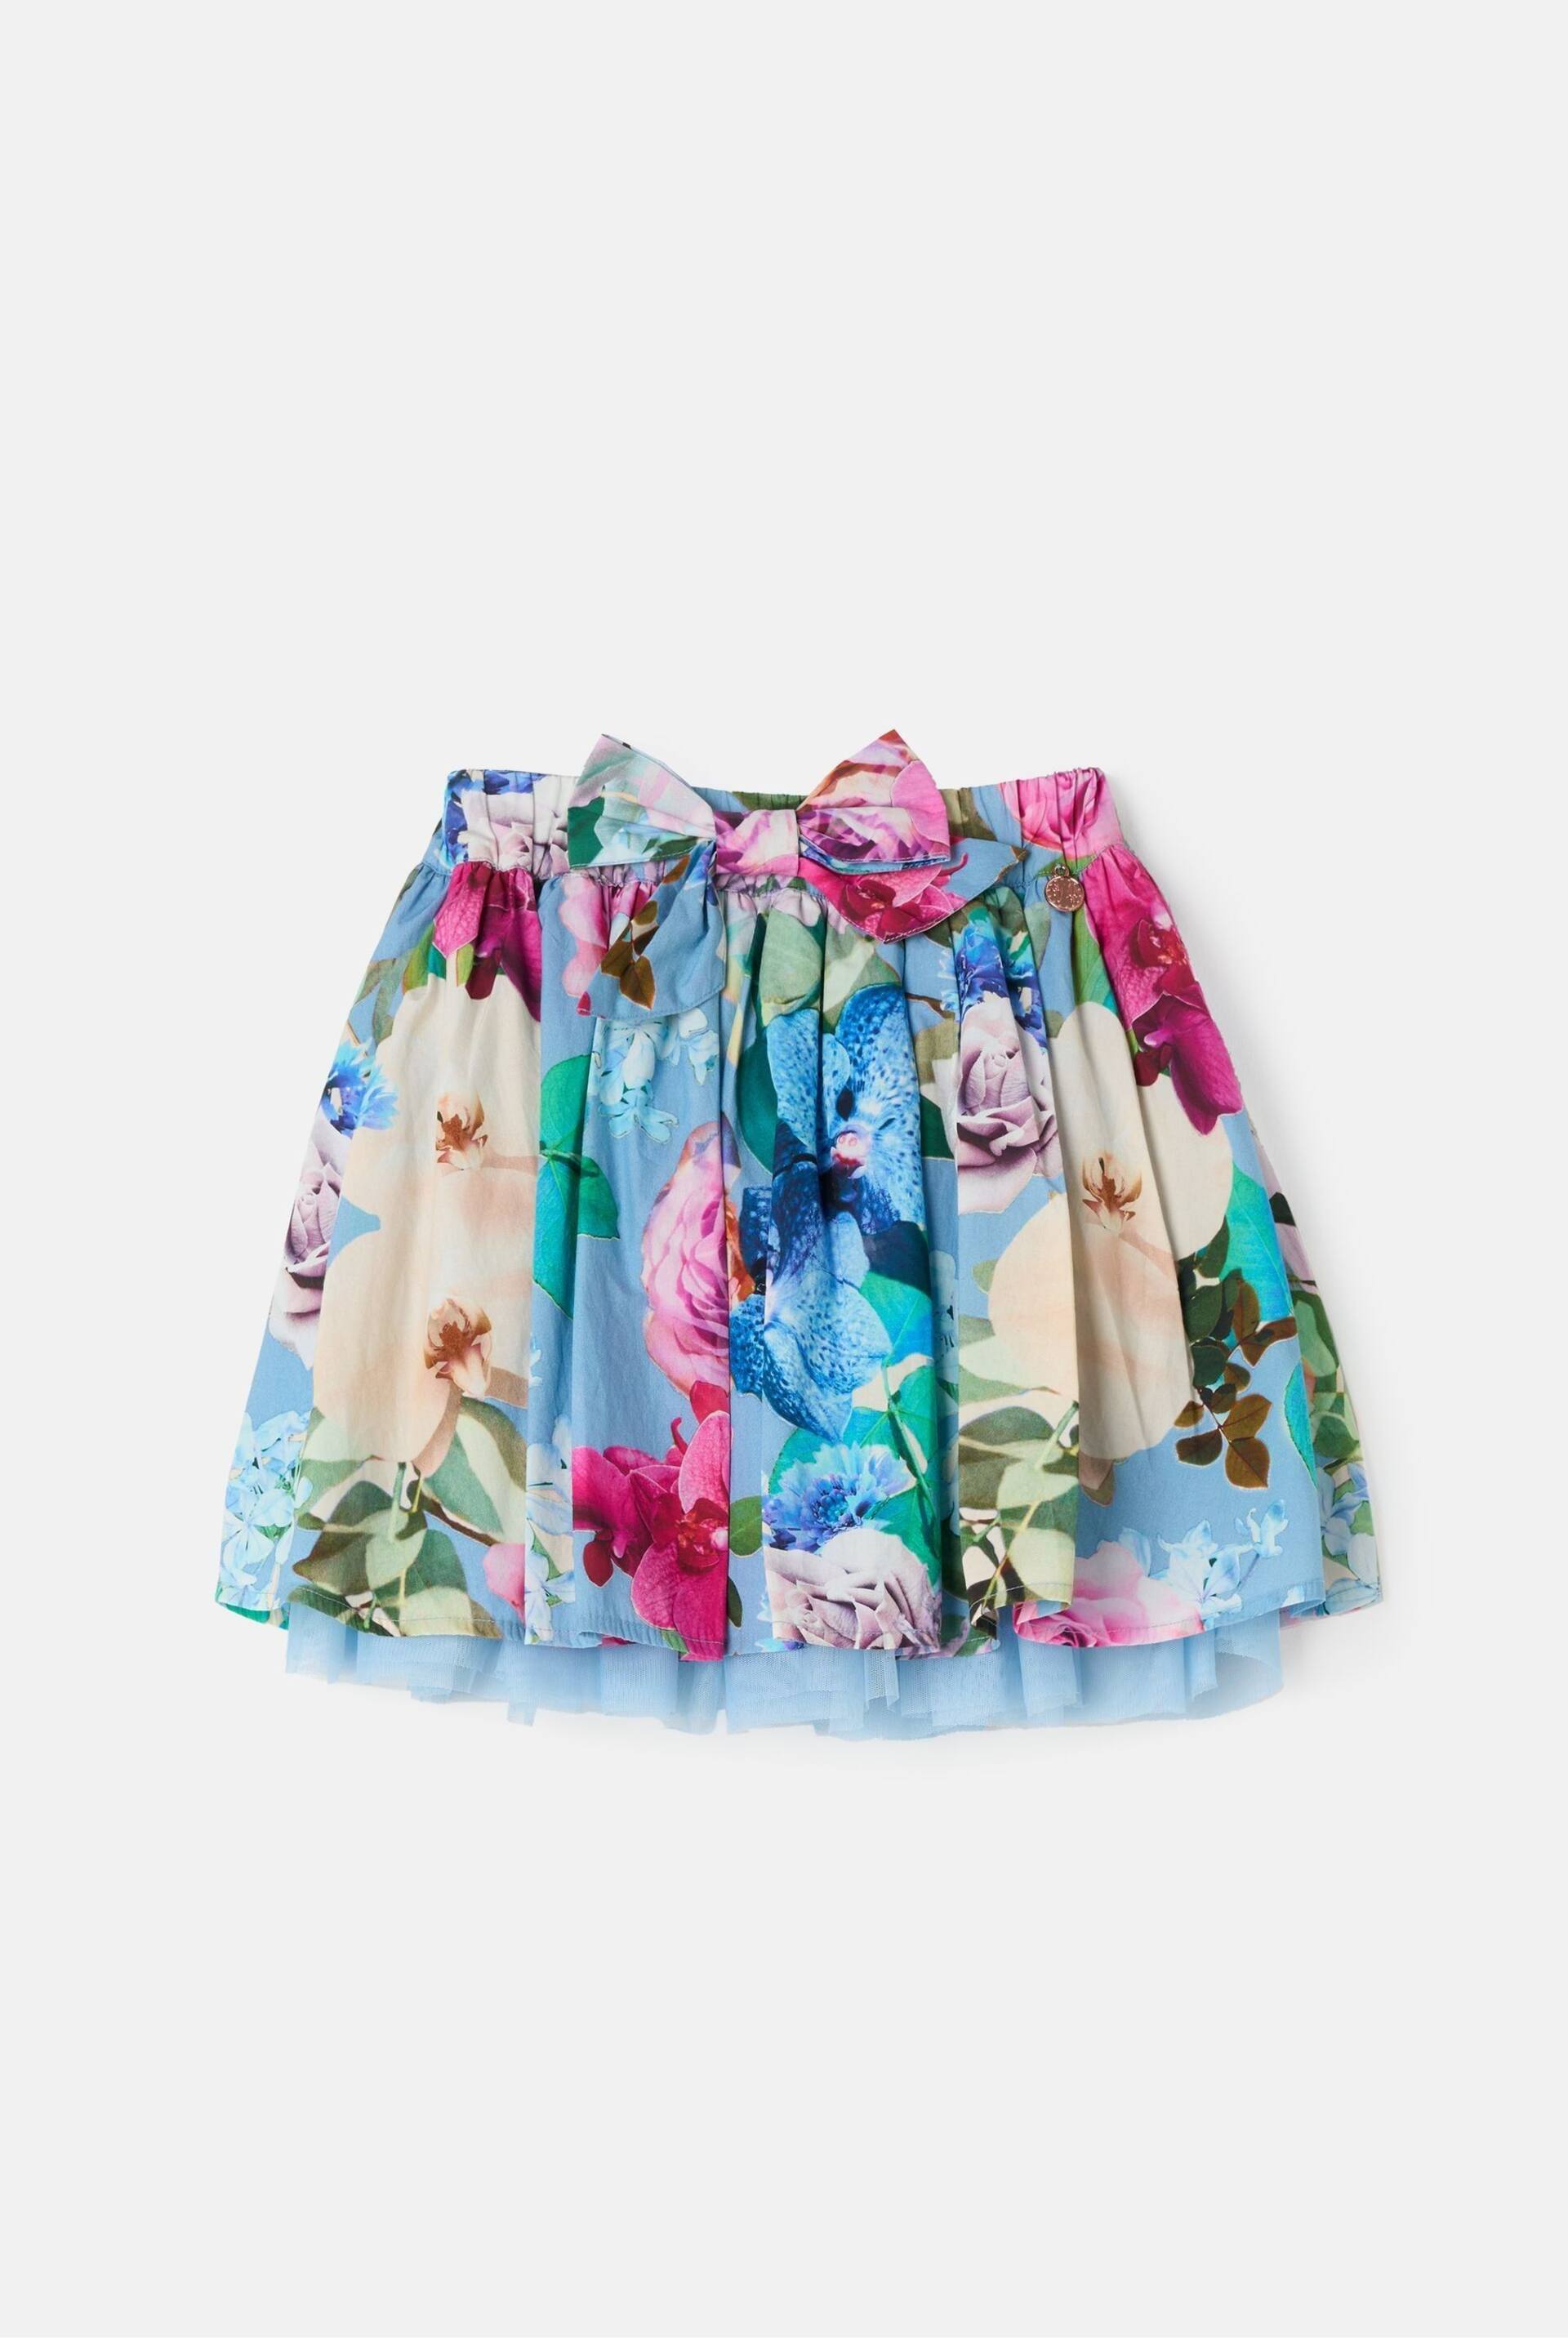 Angel & Rocket Blue Darcy Printed Layered Skirt - Image 3 of 5